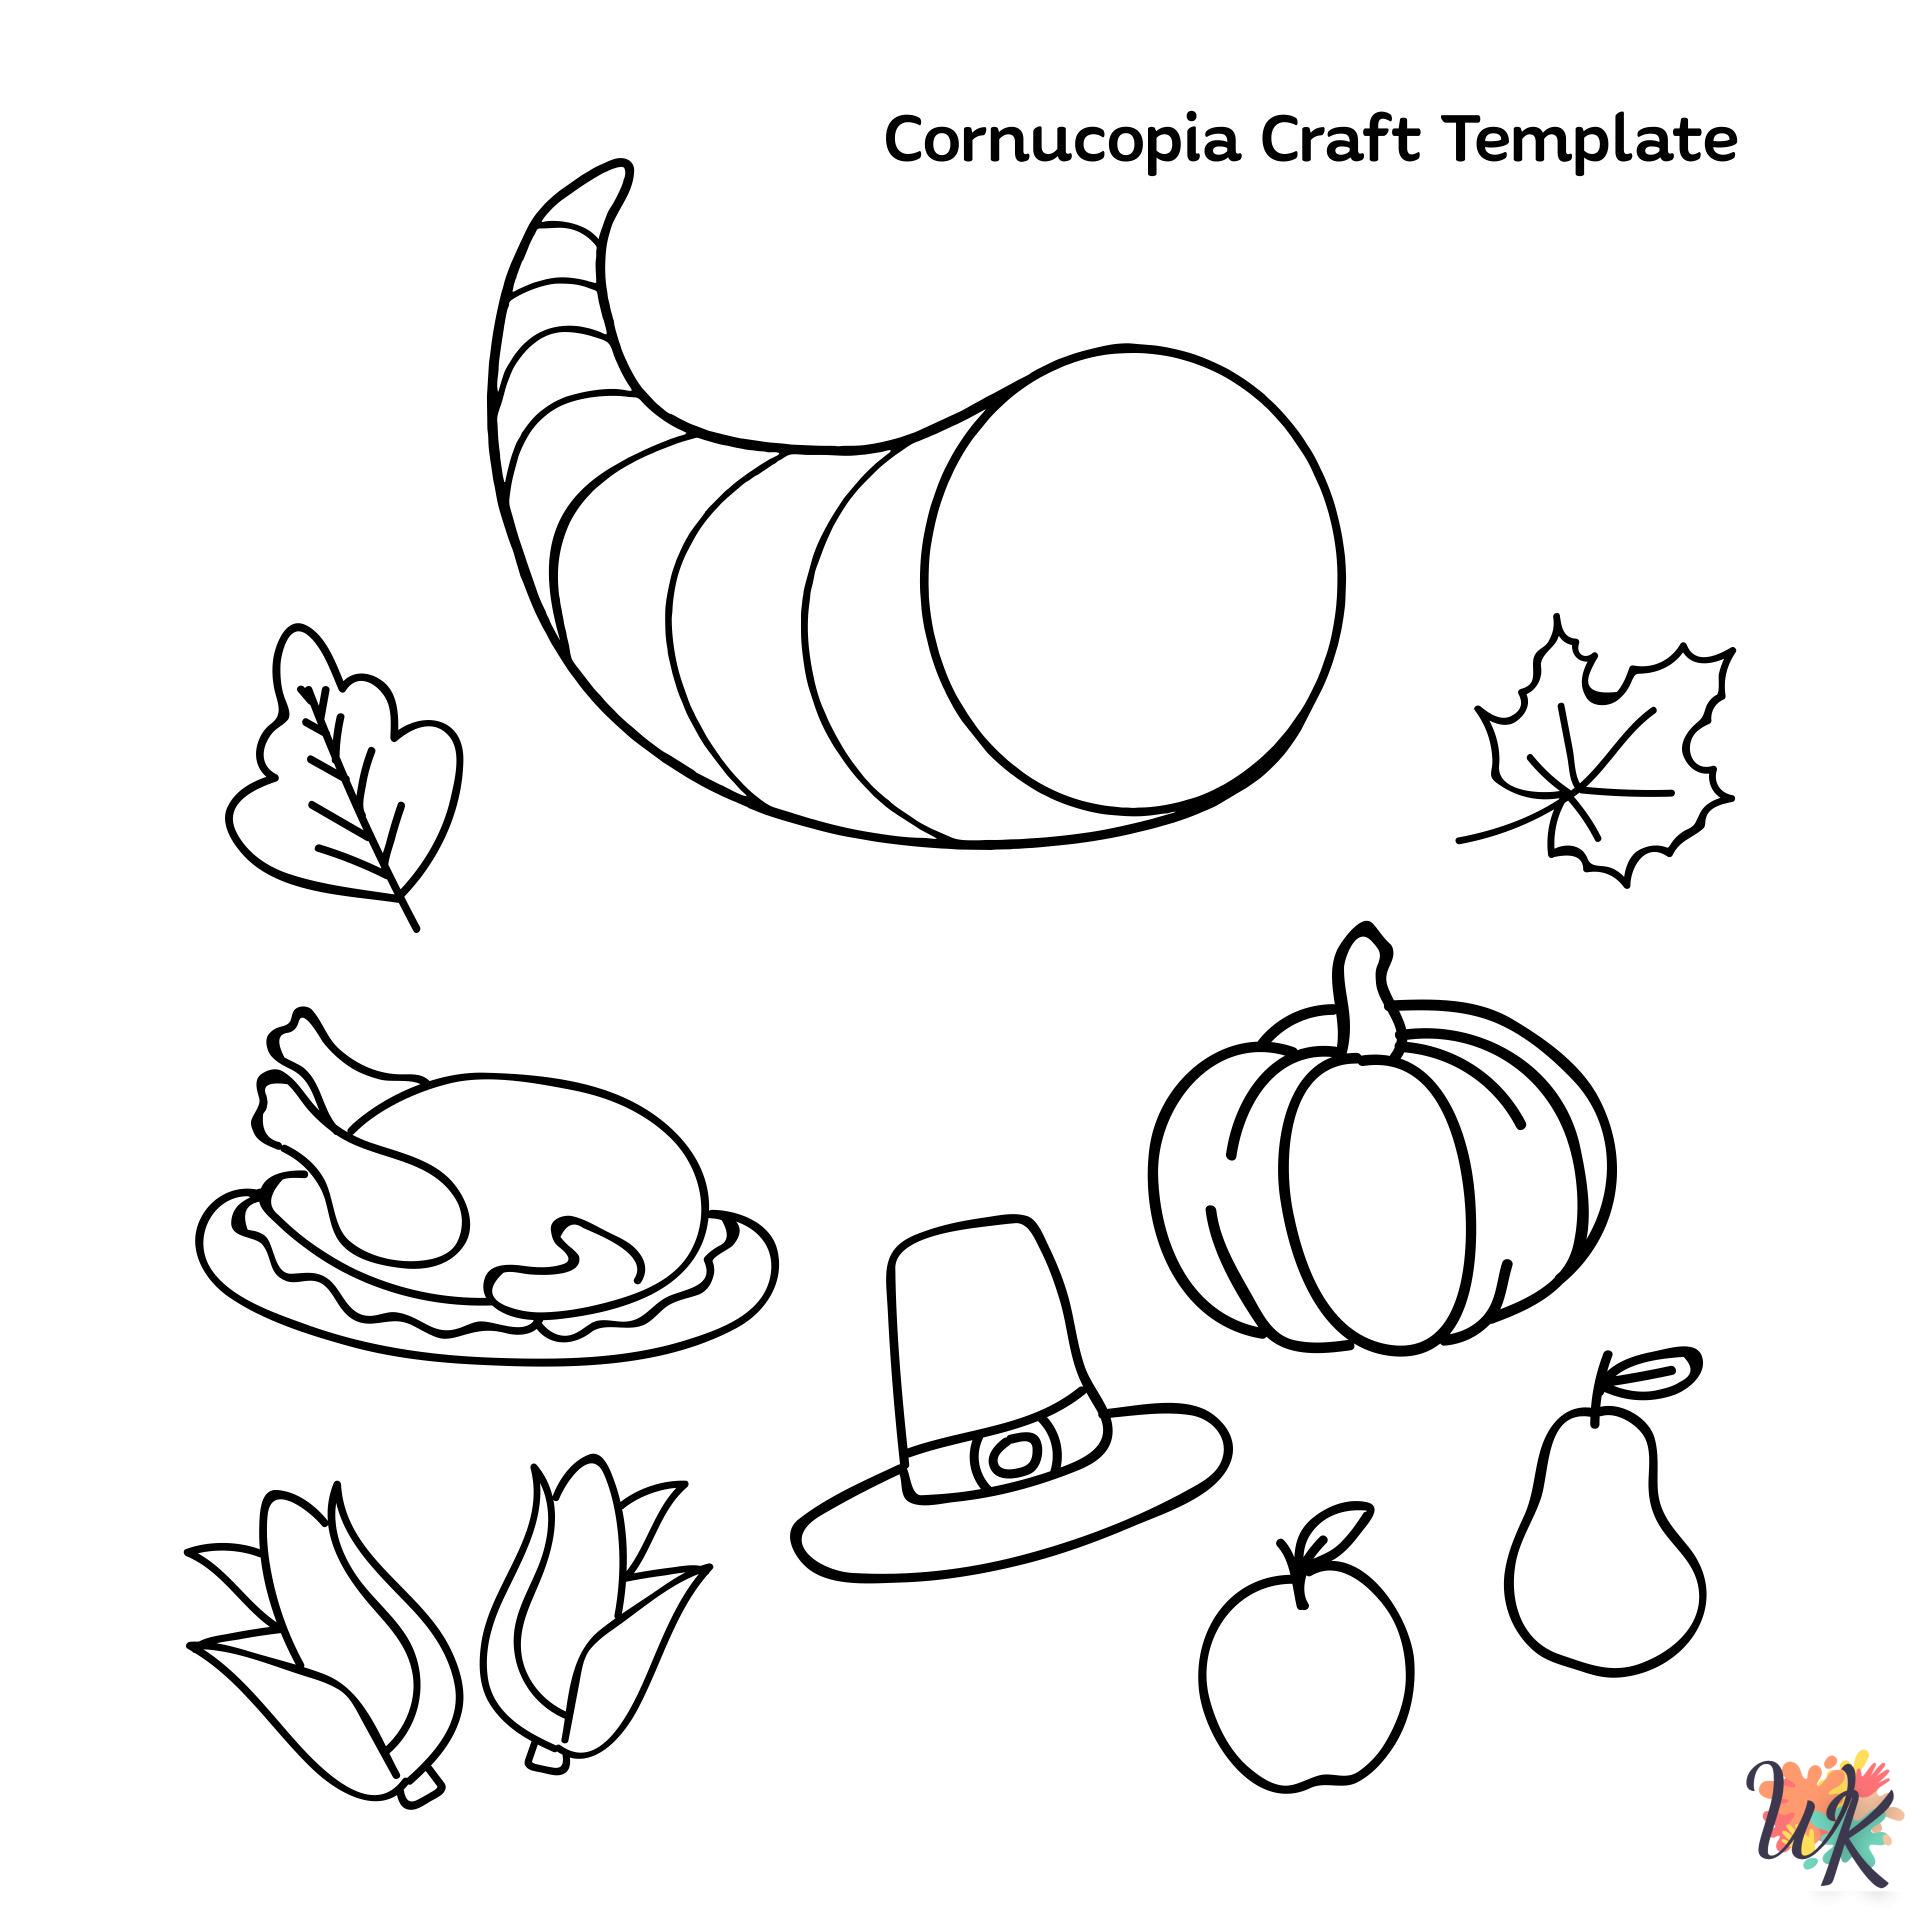 Cornucopia coloring pages printable free